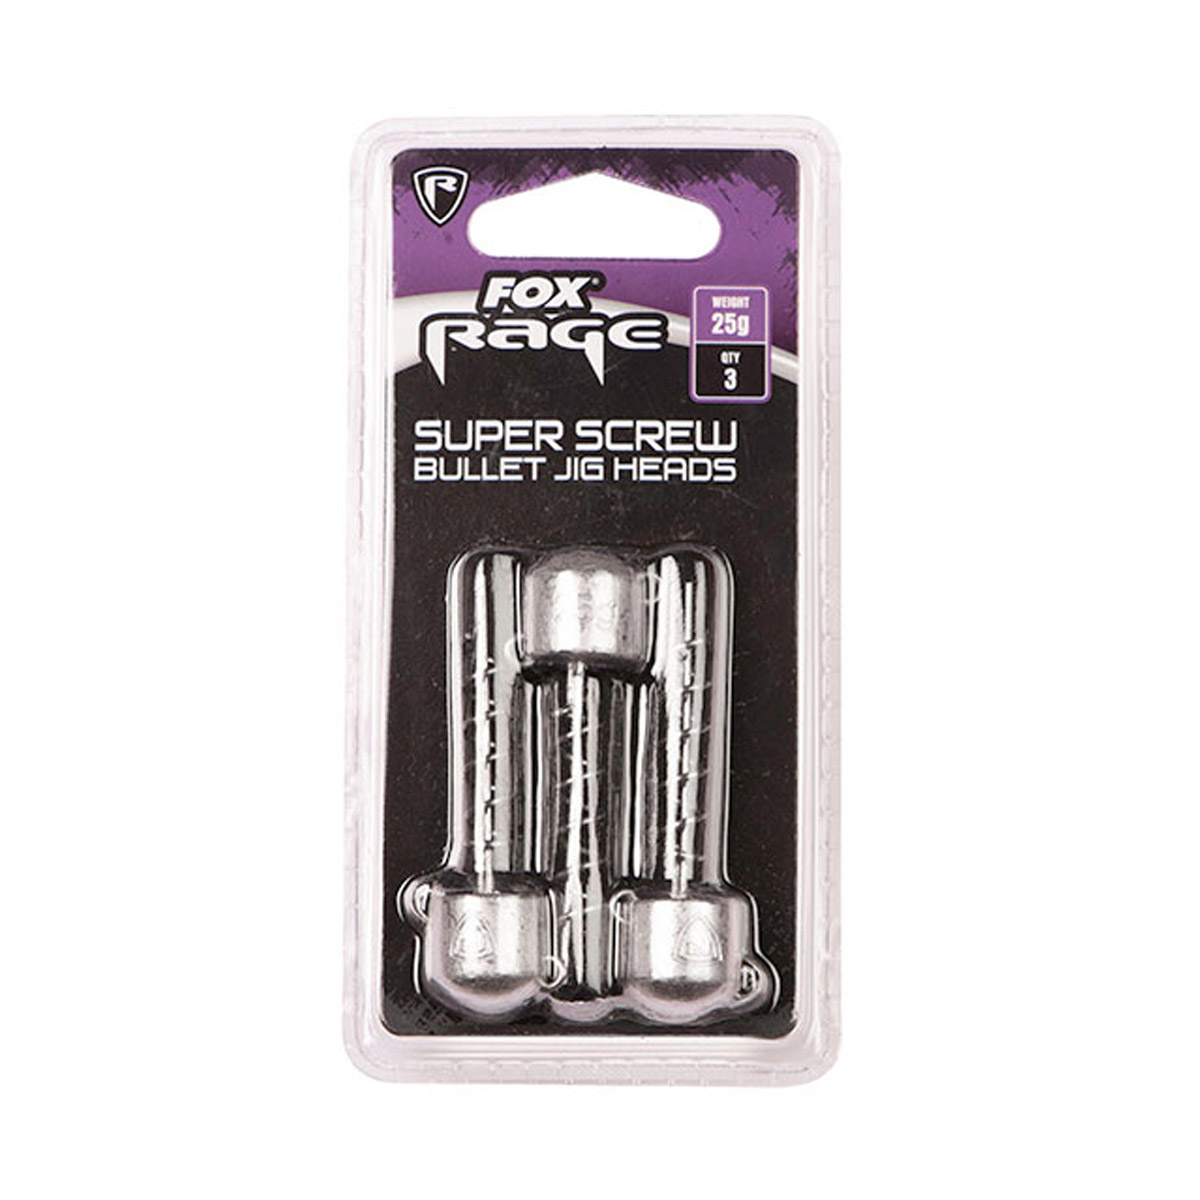 Fox Rage Super Screw Bullet Heads -  25 gram